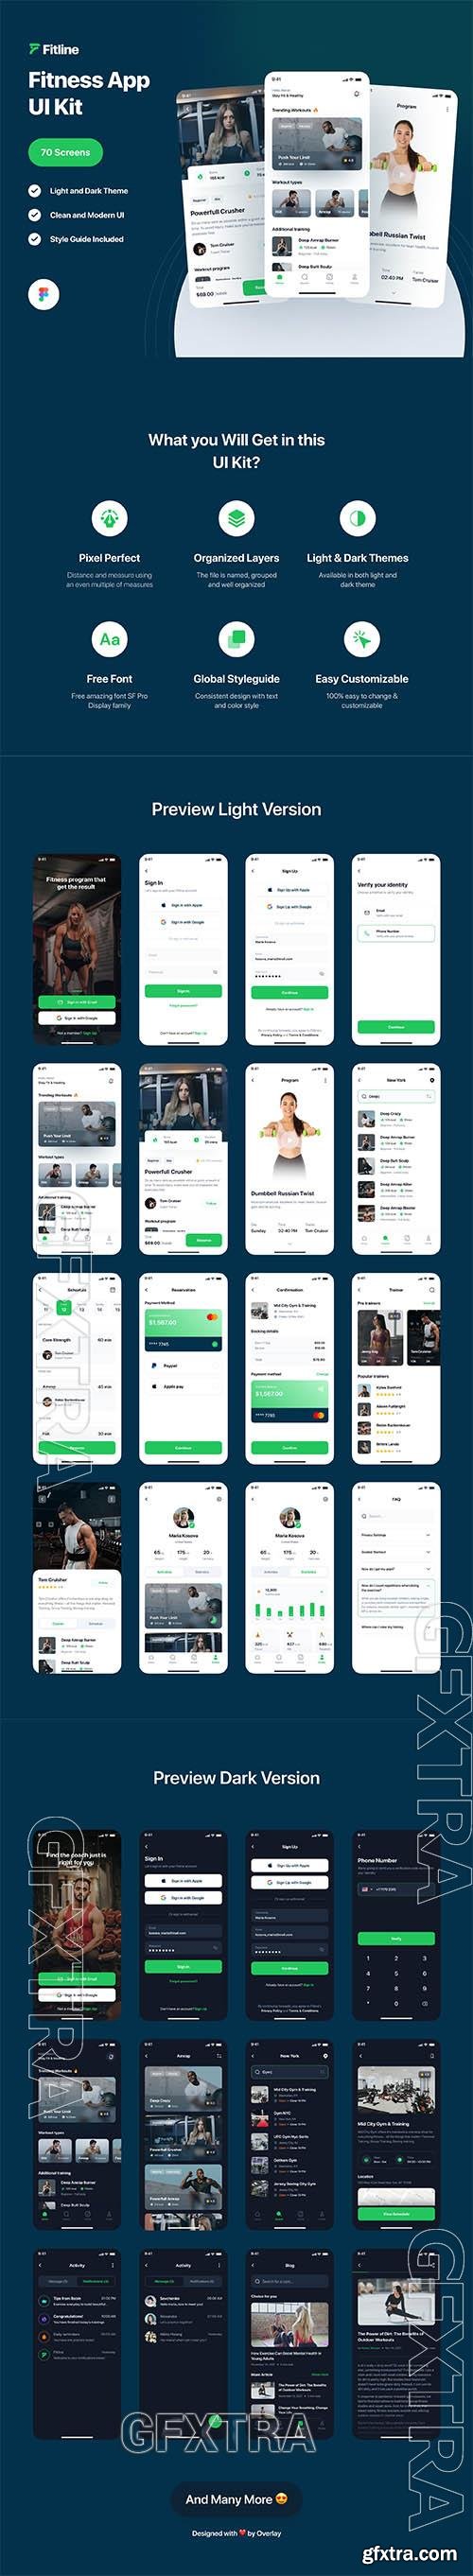 Fitline - Fitness & Workout App UI Kit